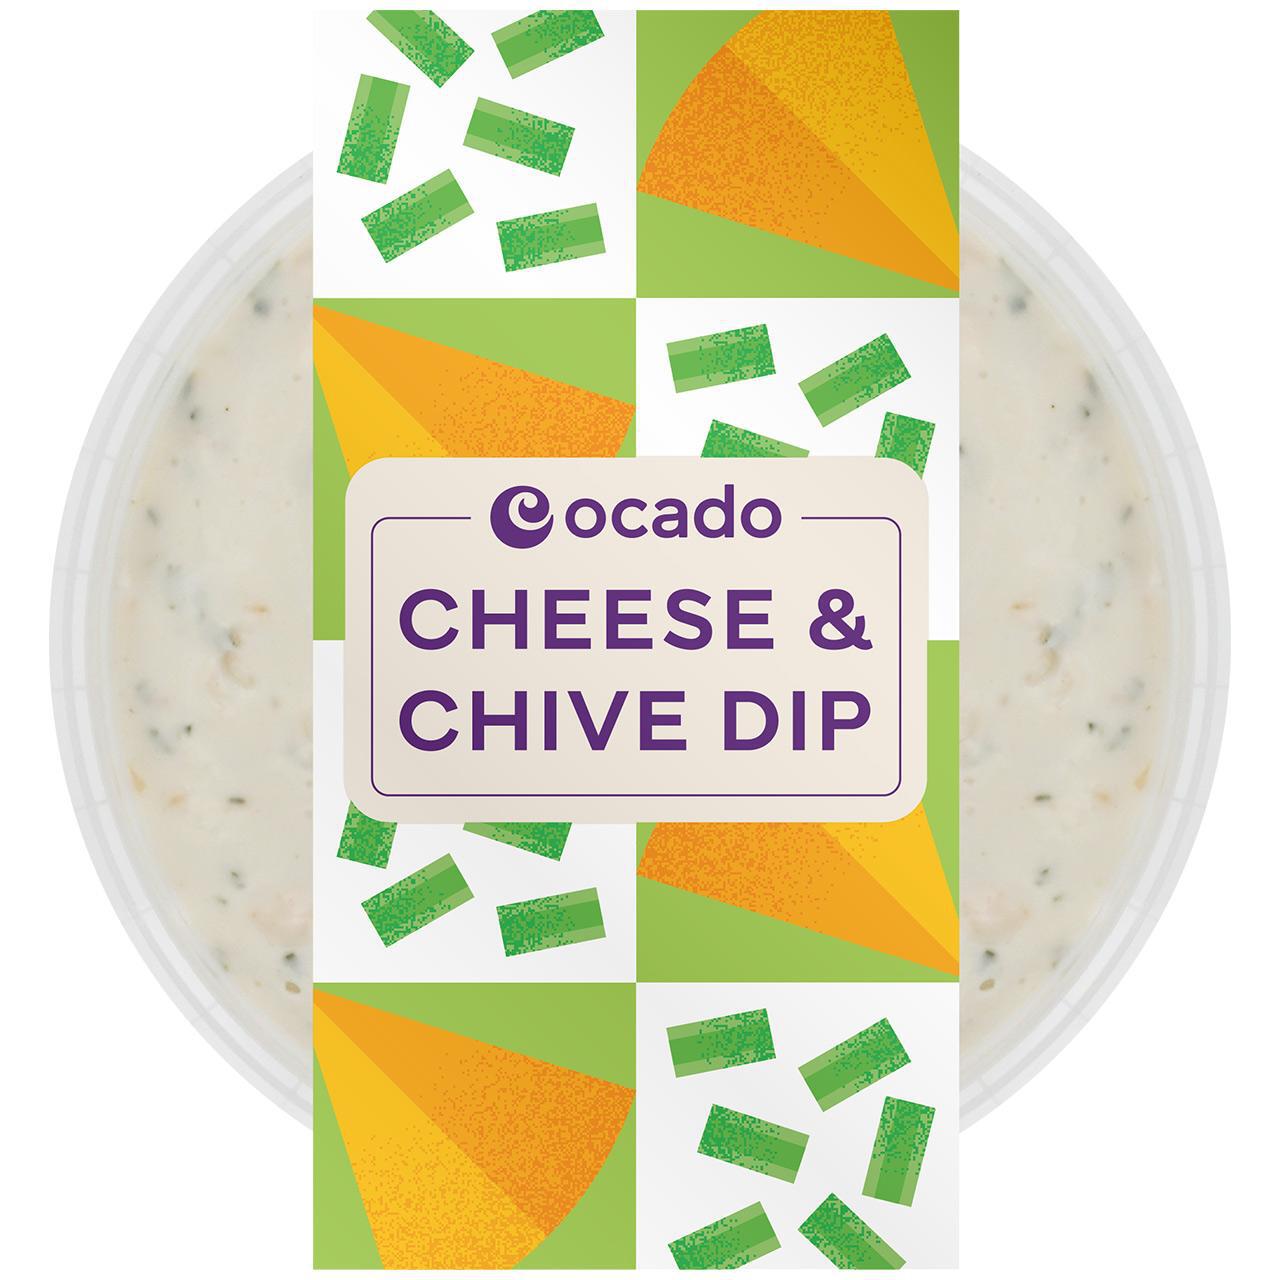 Ocado Cheese & Chive Dip 200g